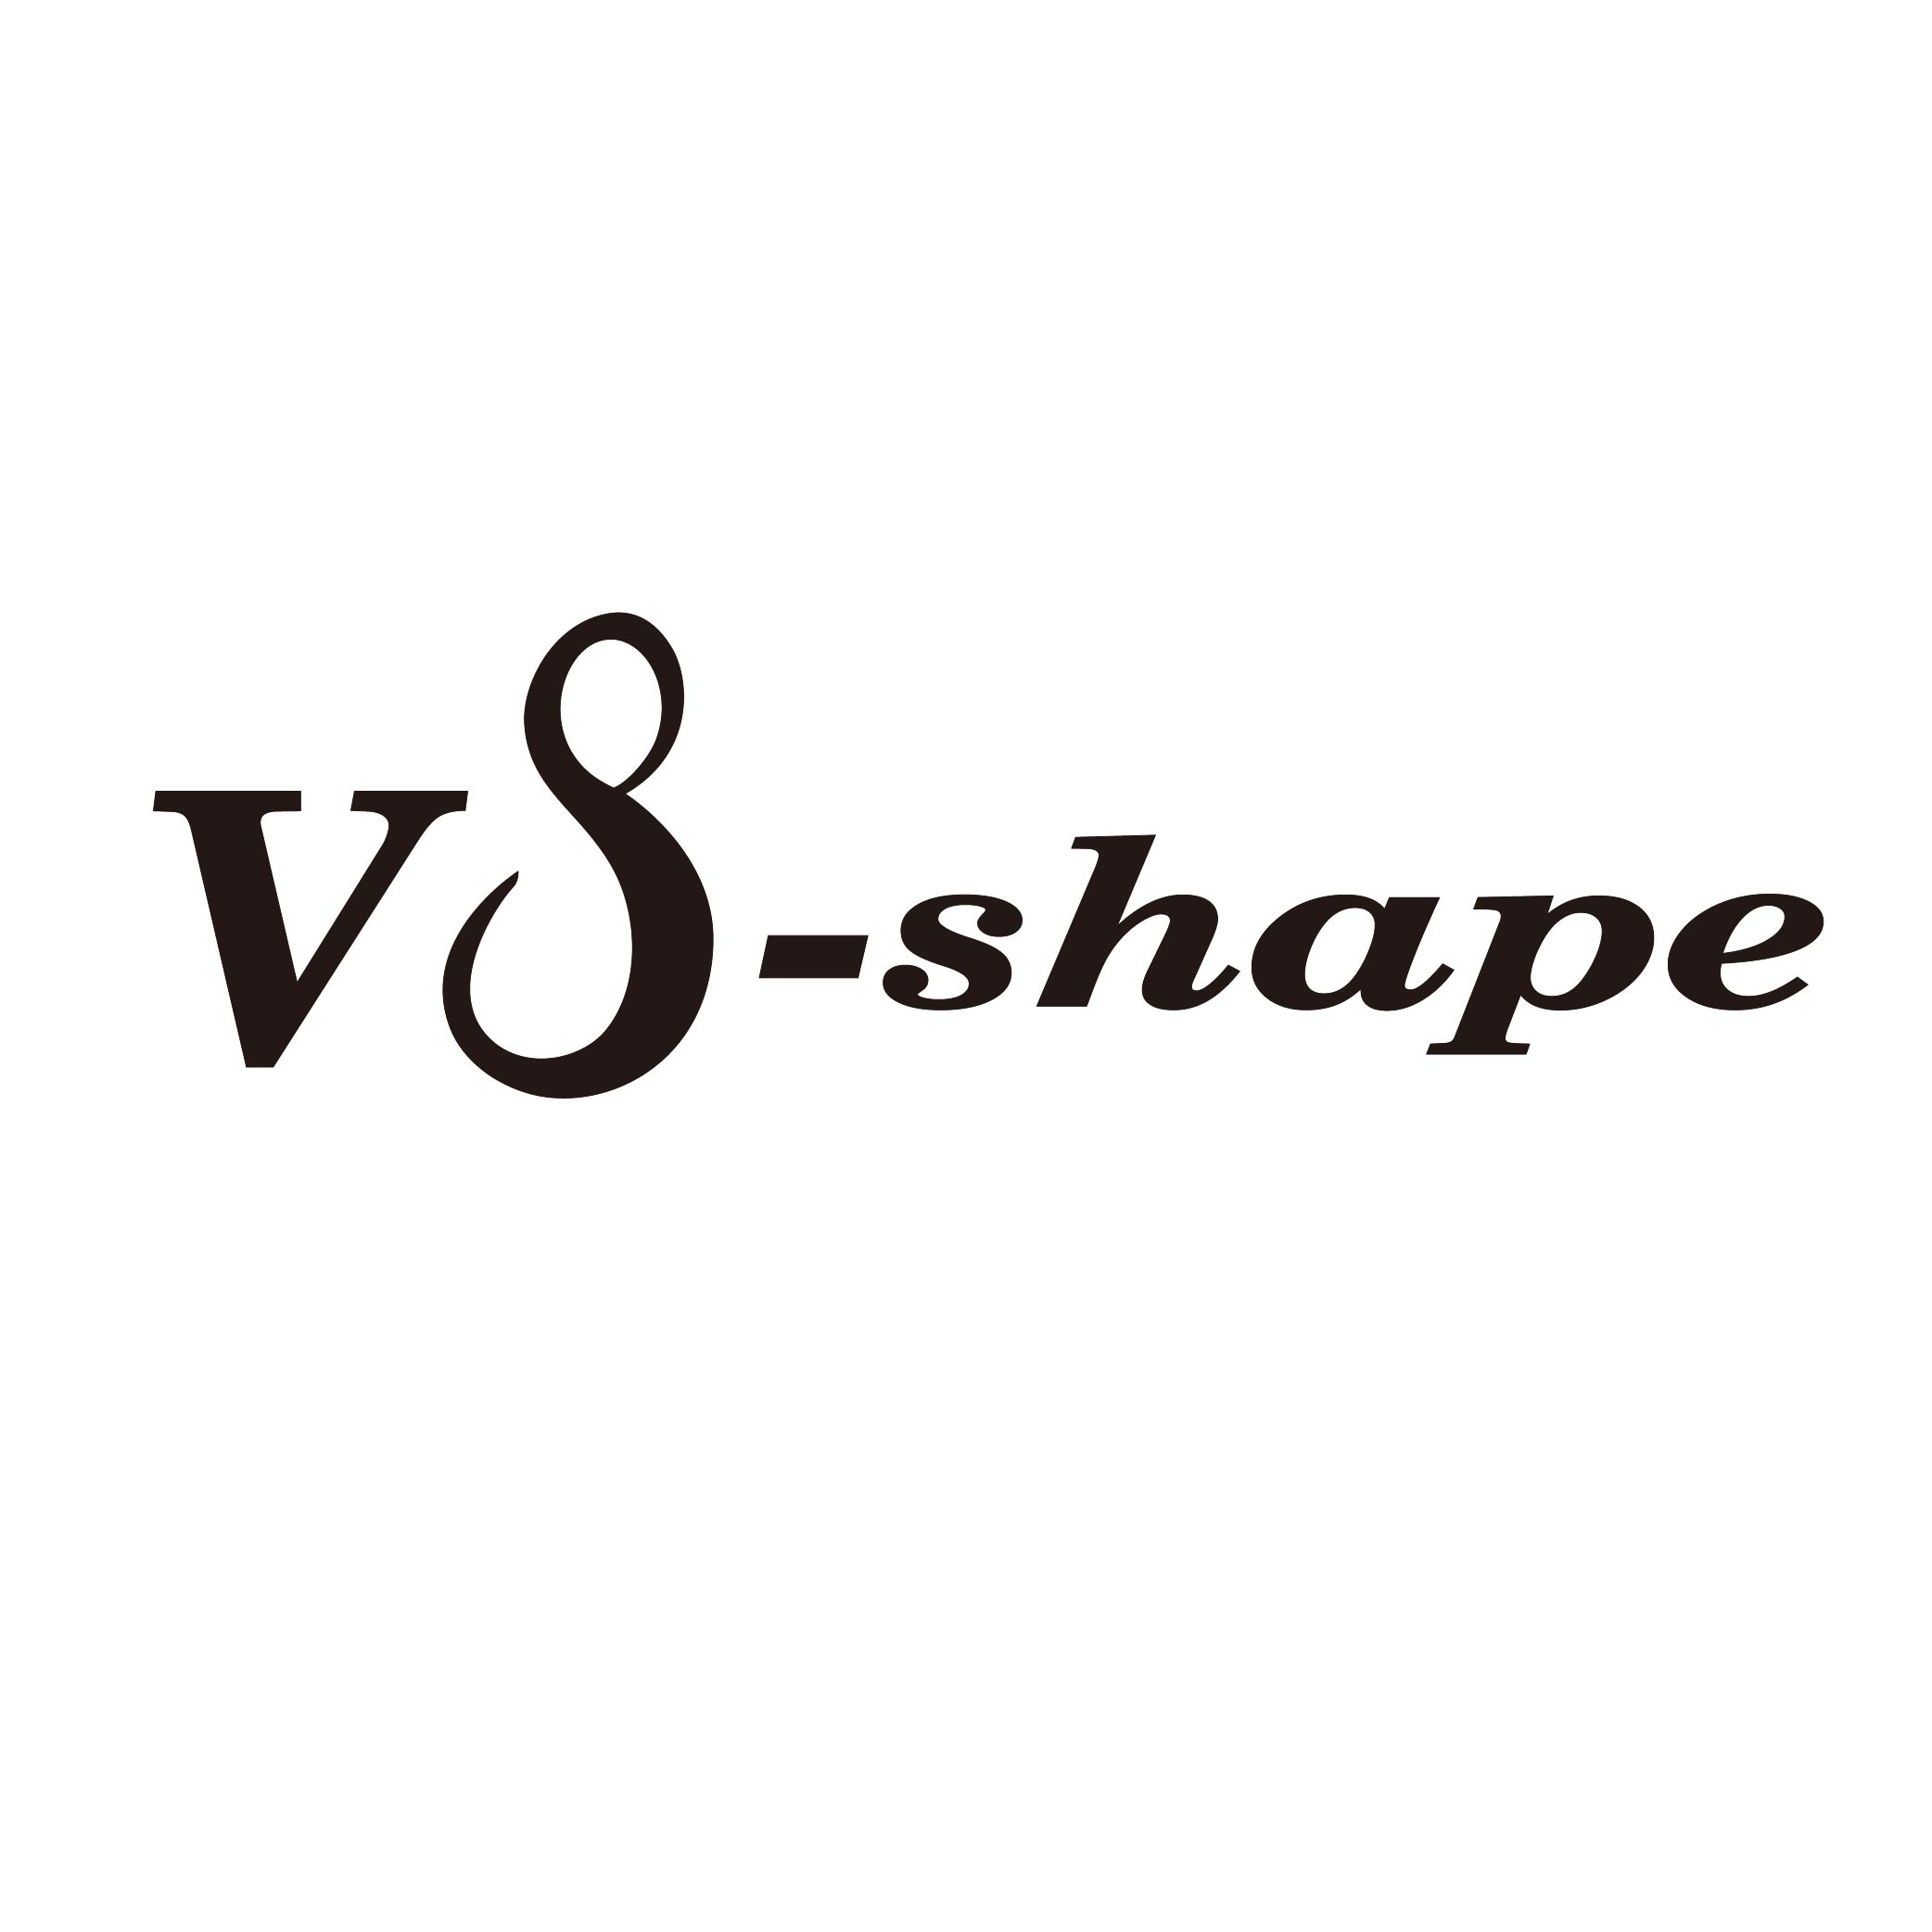 V8-shape logo